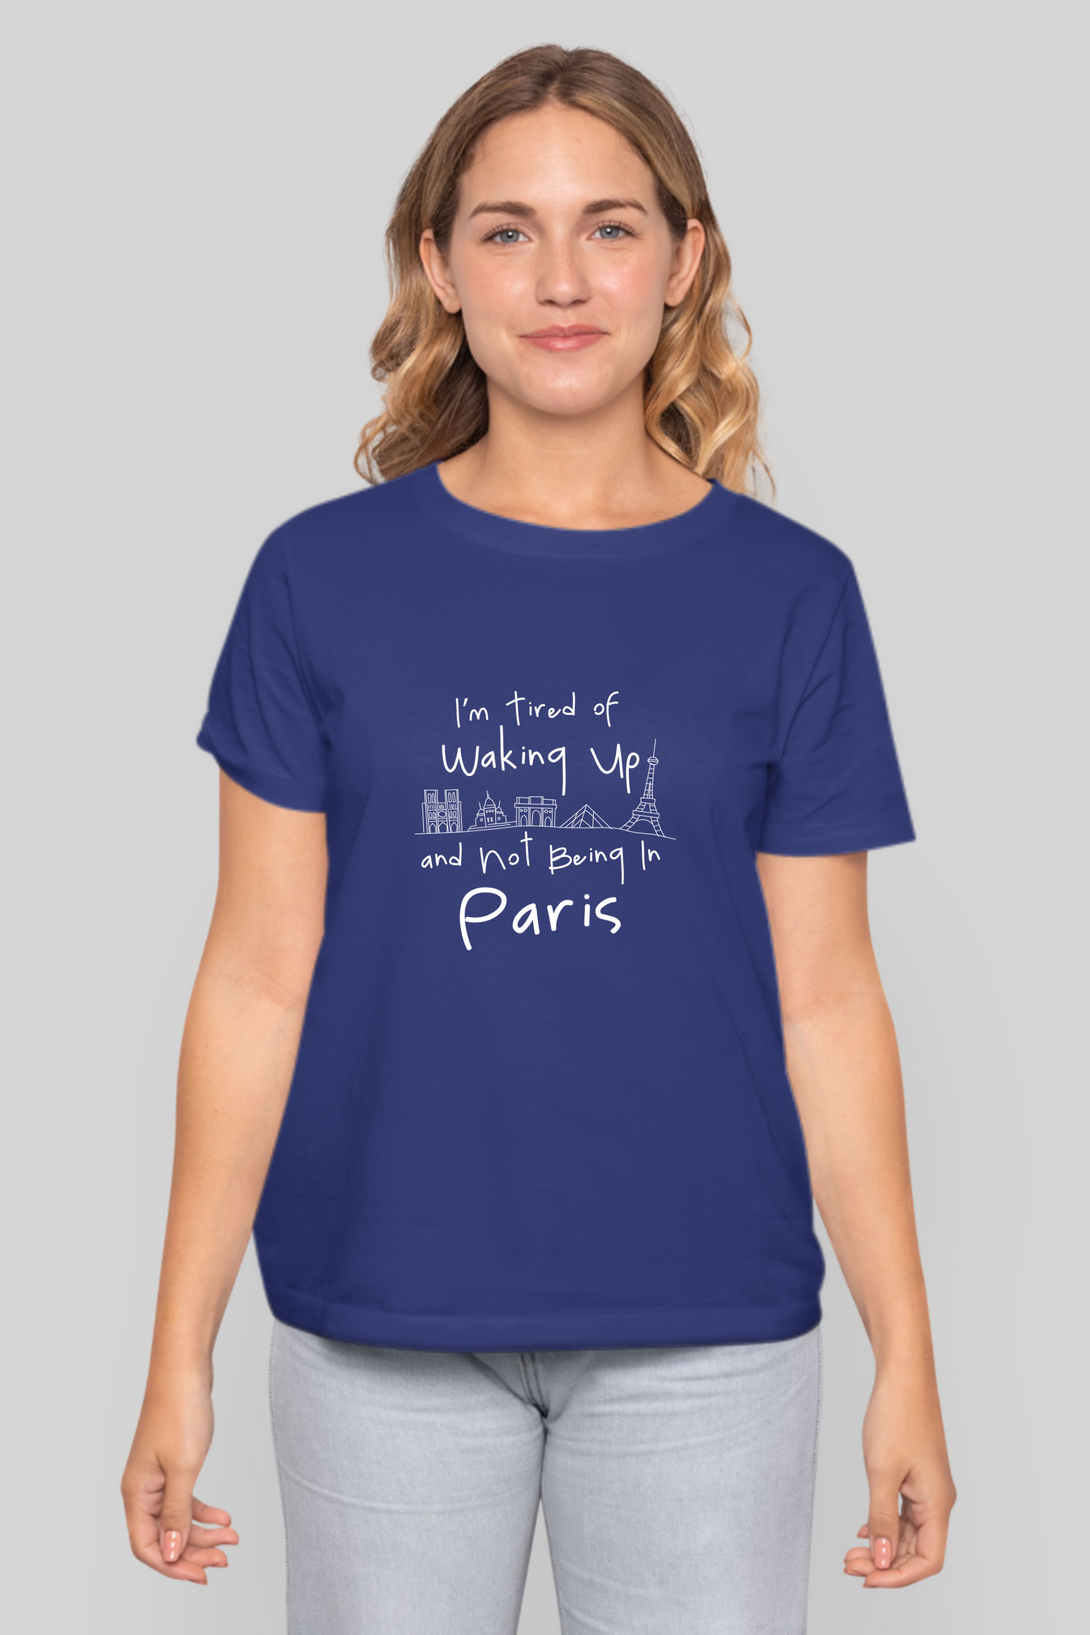 Paris Dreaming Printed T-Shirt For Women - WowWaves - 10